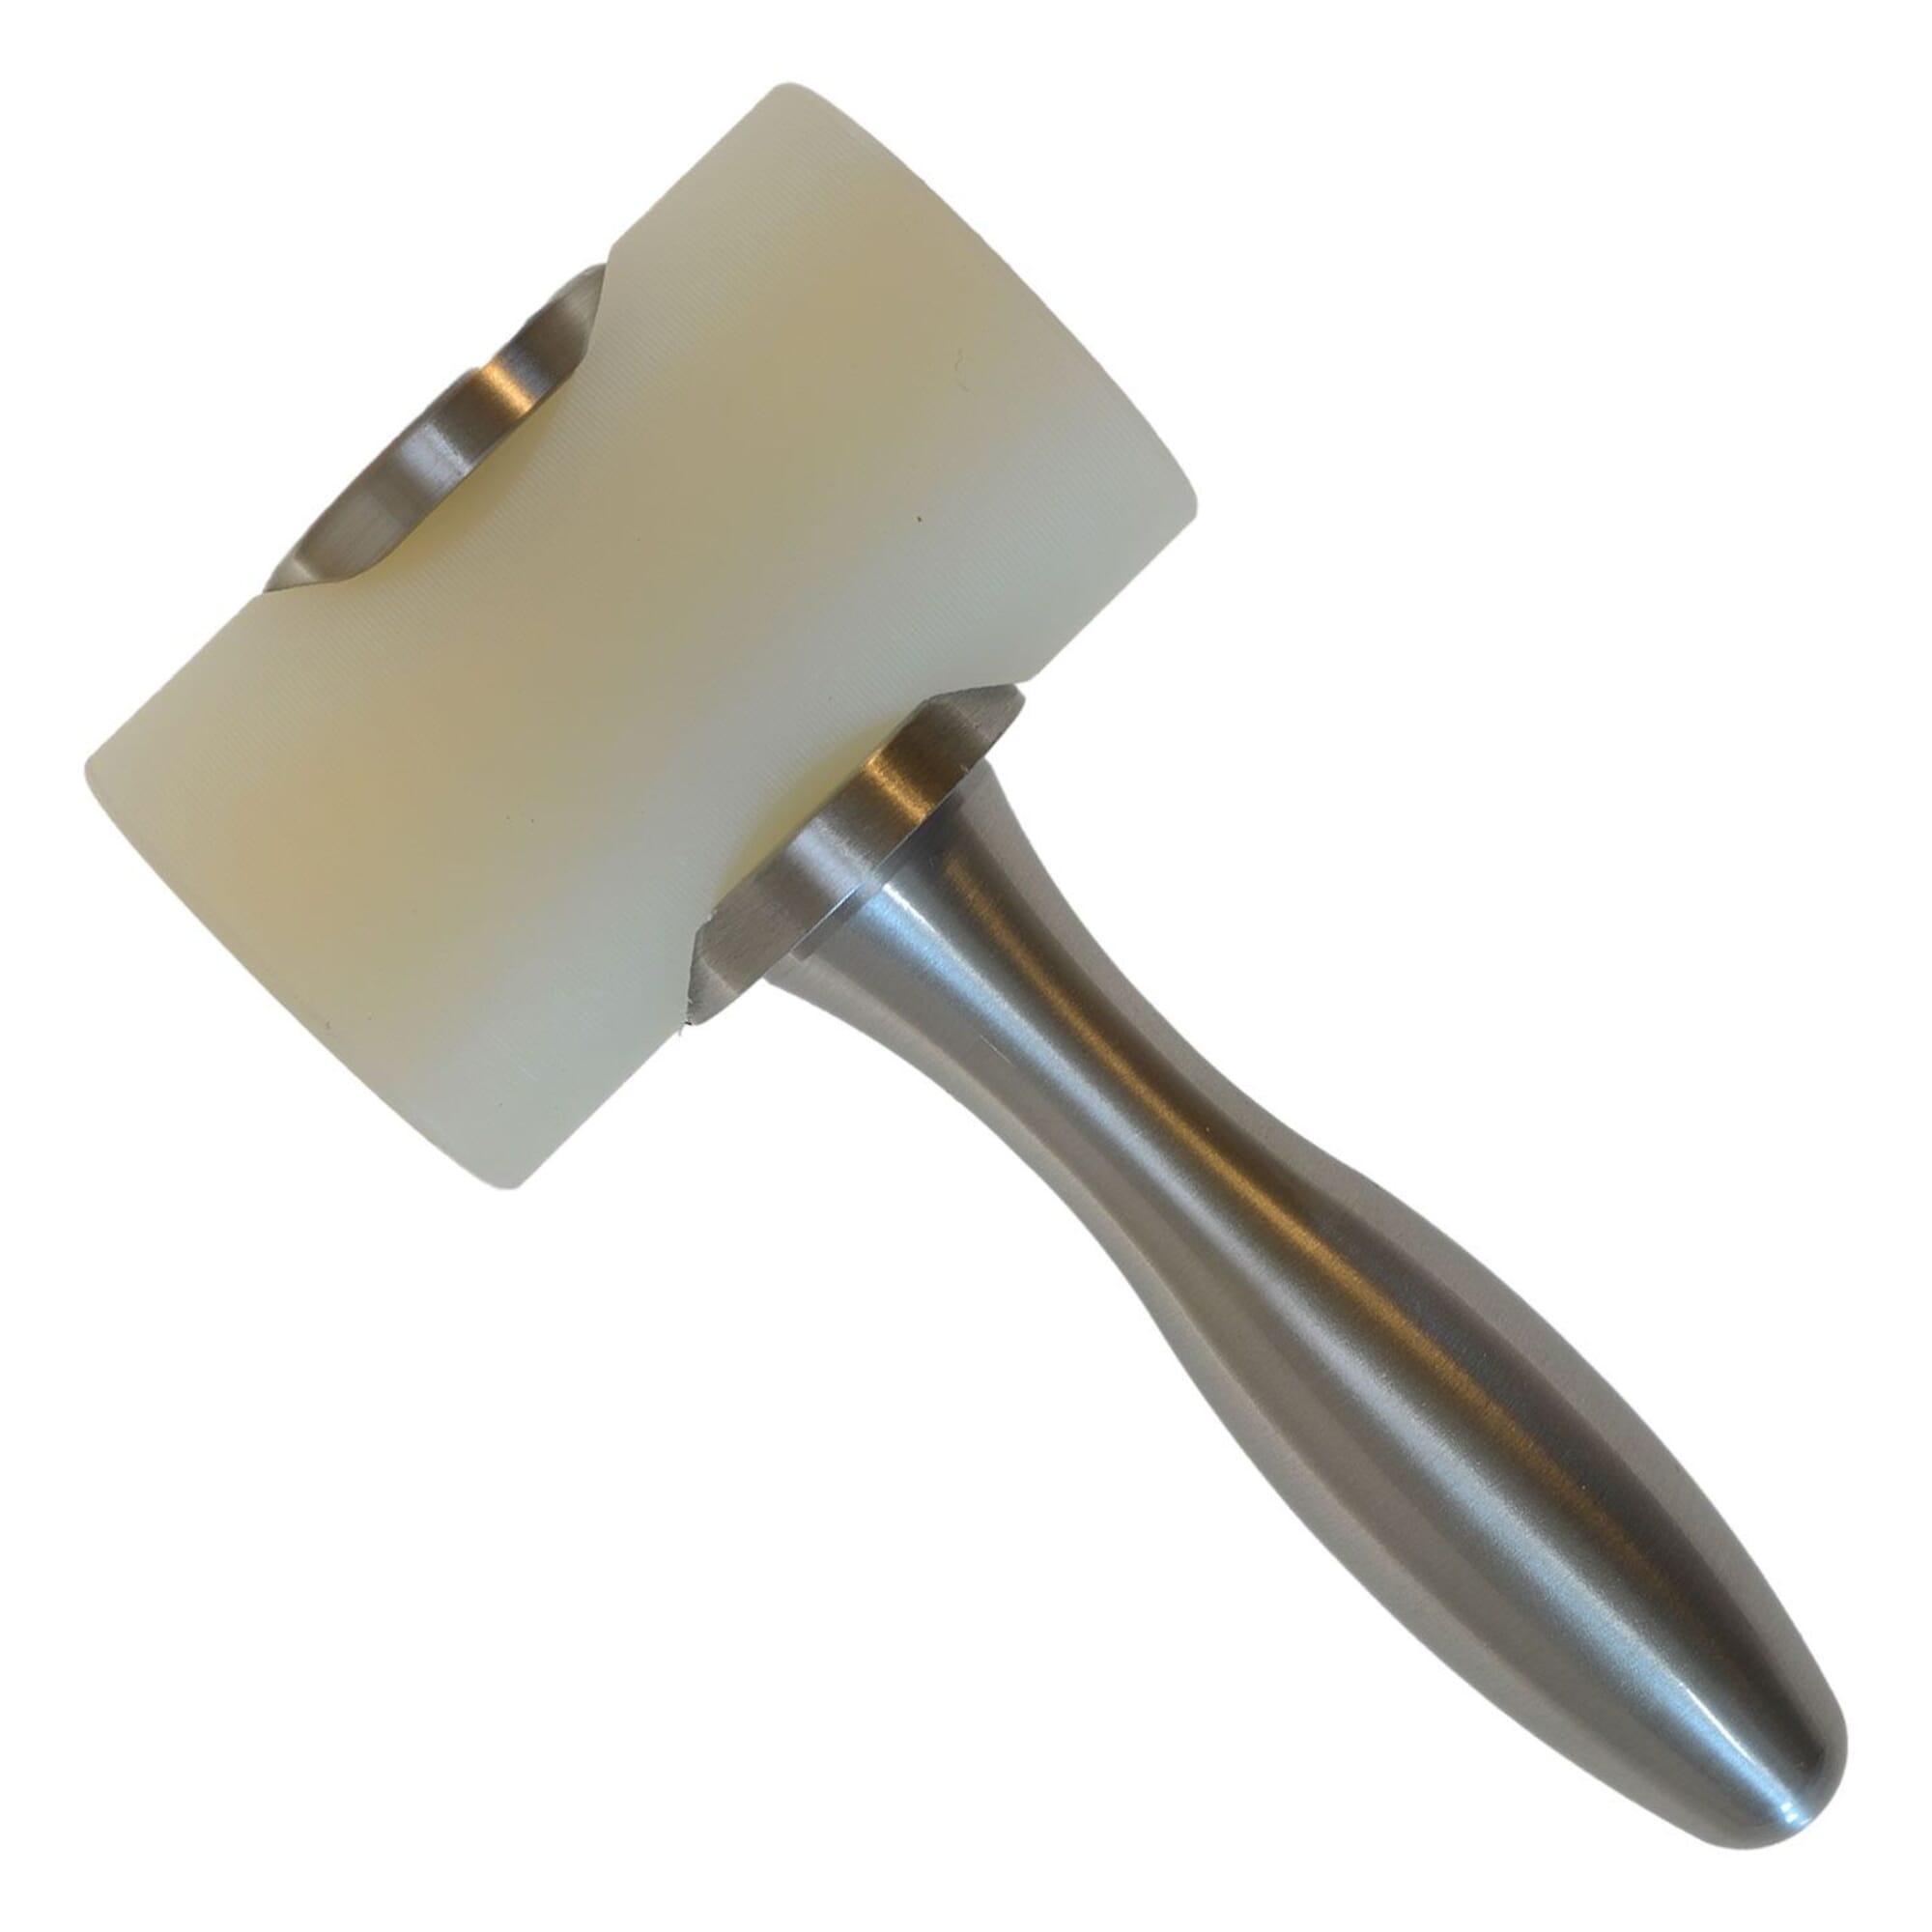 Nylon Head Hammer